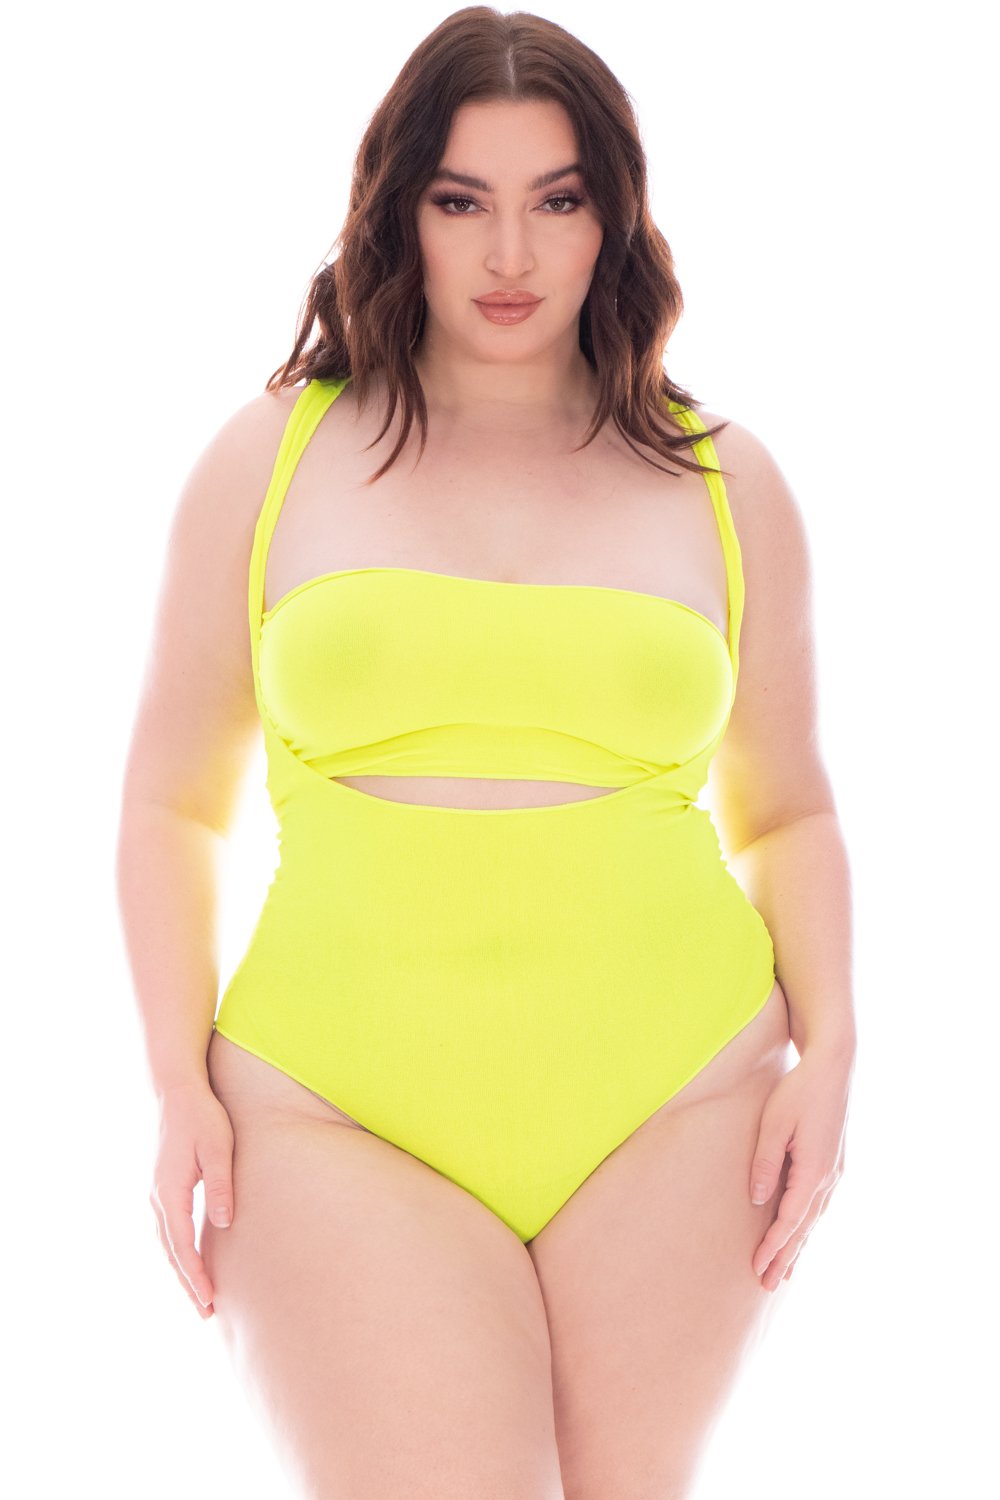 Smile Lingerie Intimates One Size / Neon Lime Plus Size Bandeau & Suspender Bodysuit - Neon Lime